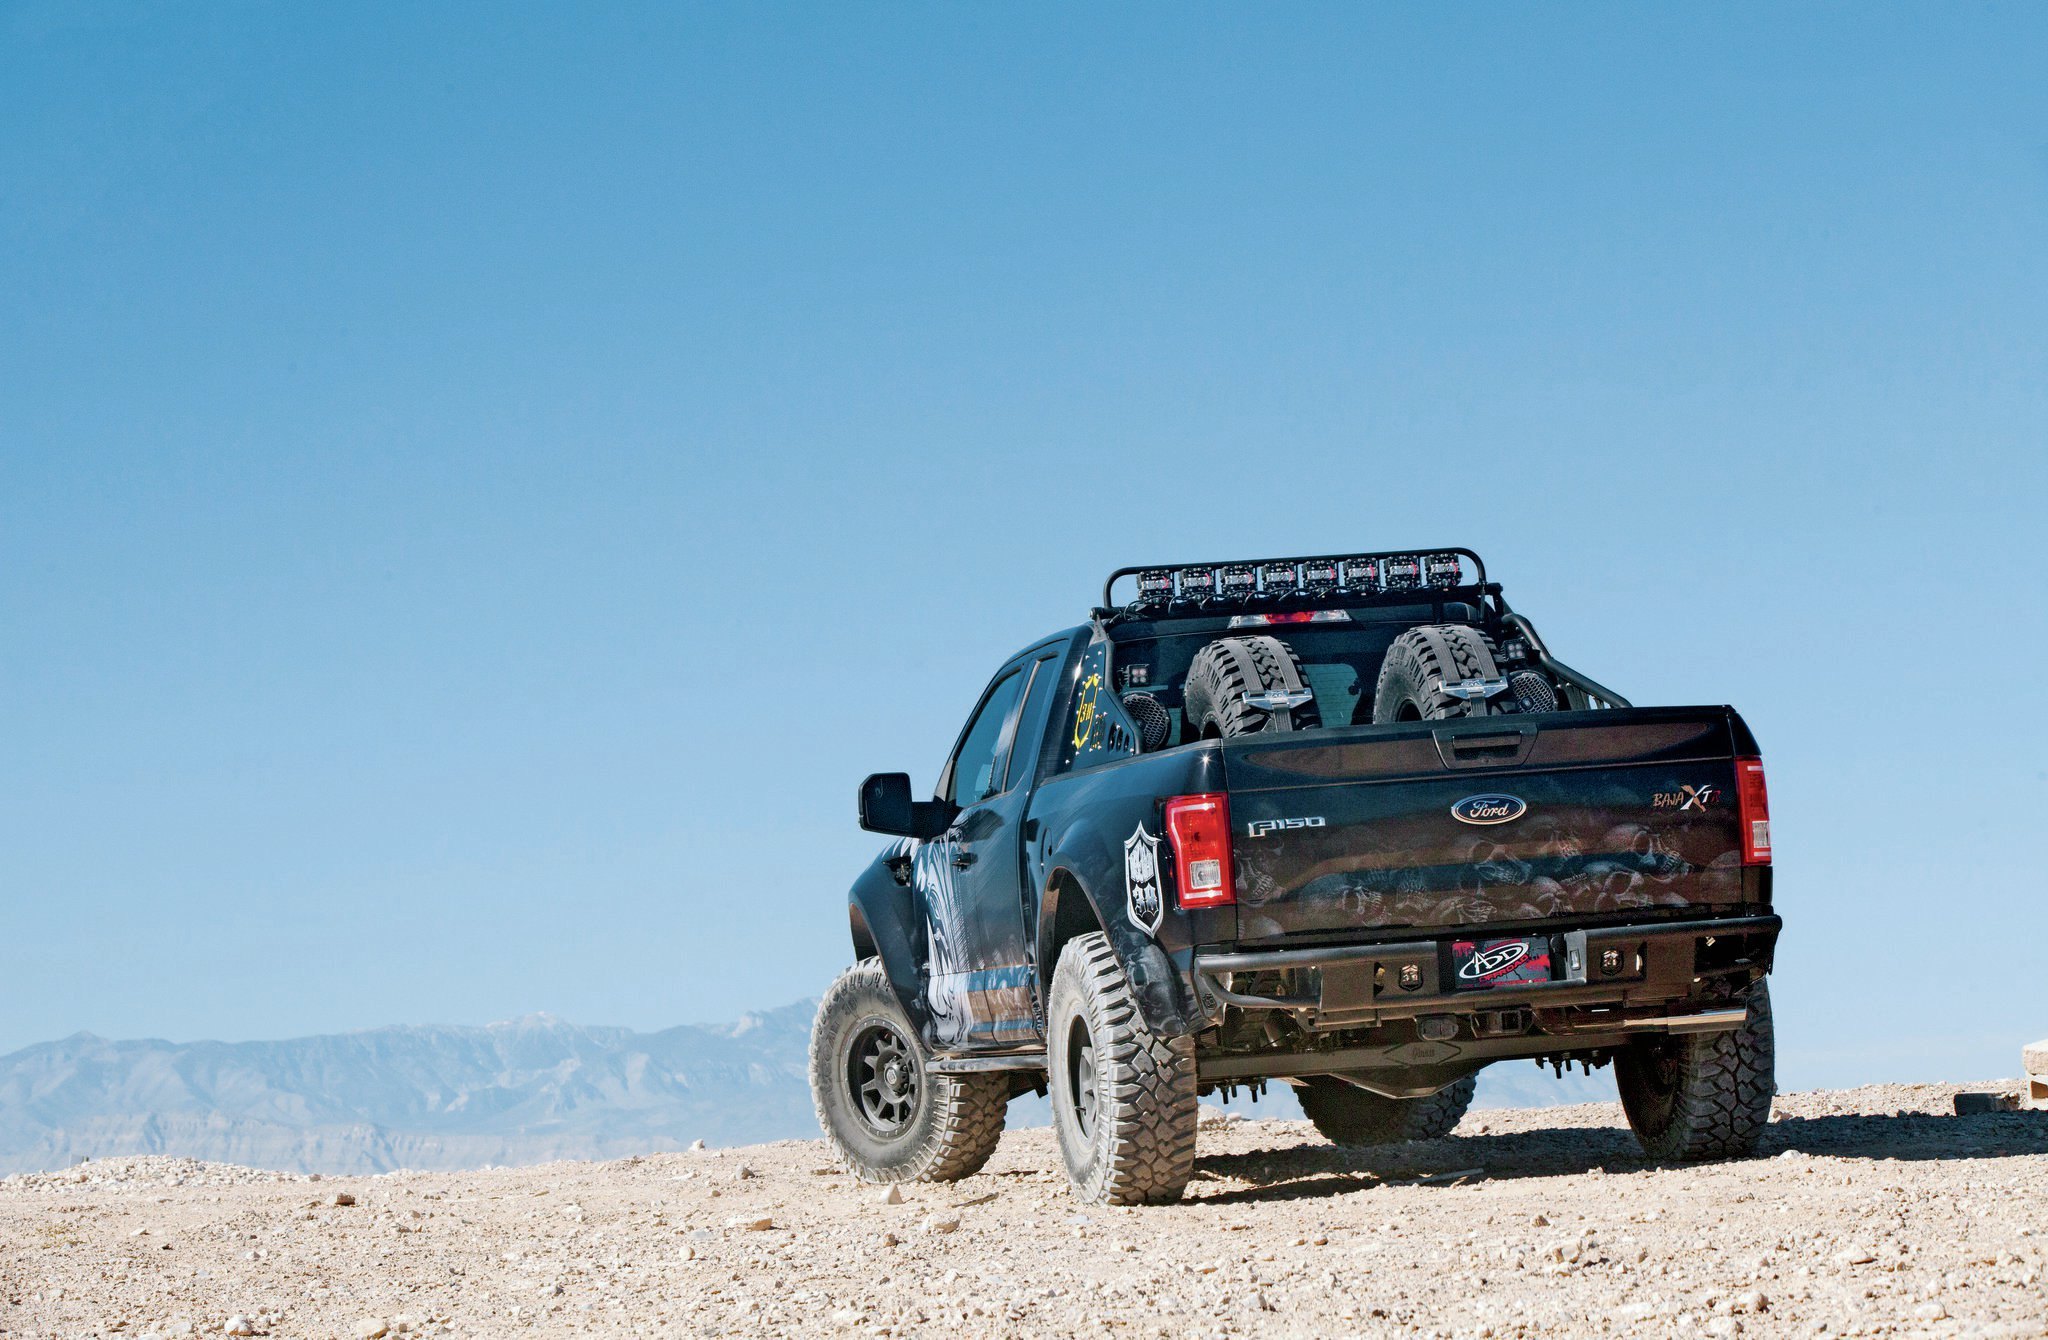 Ford F150 Desert Chase Truck - Photo by Chris Shelton